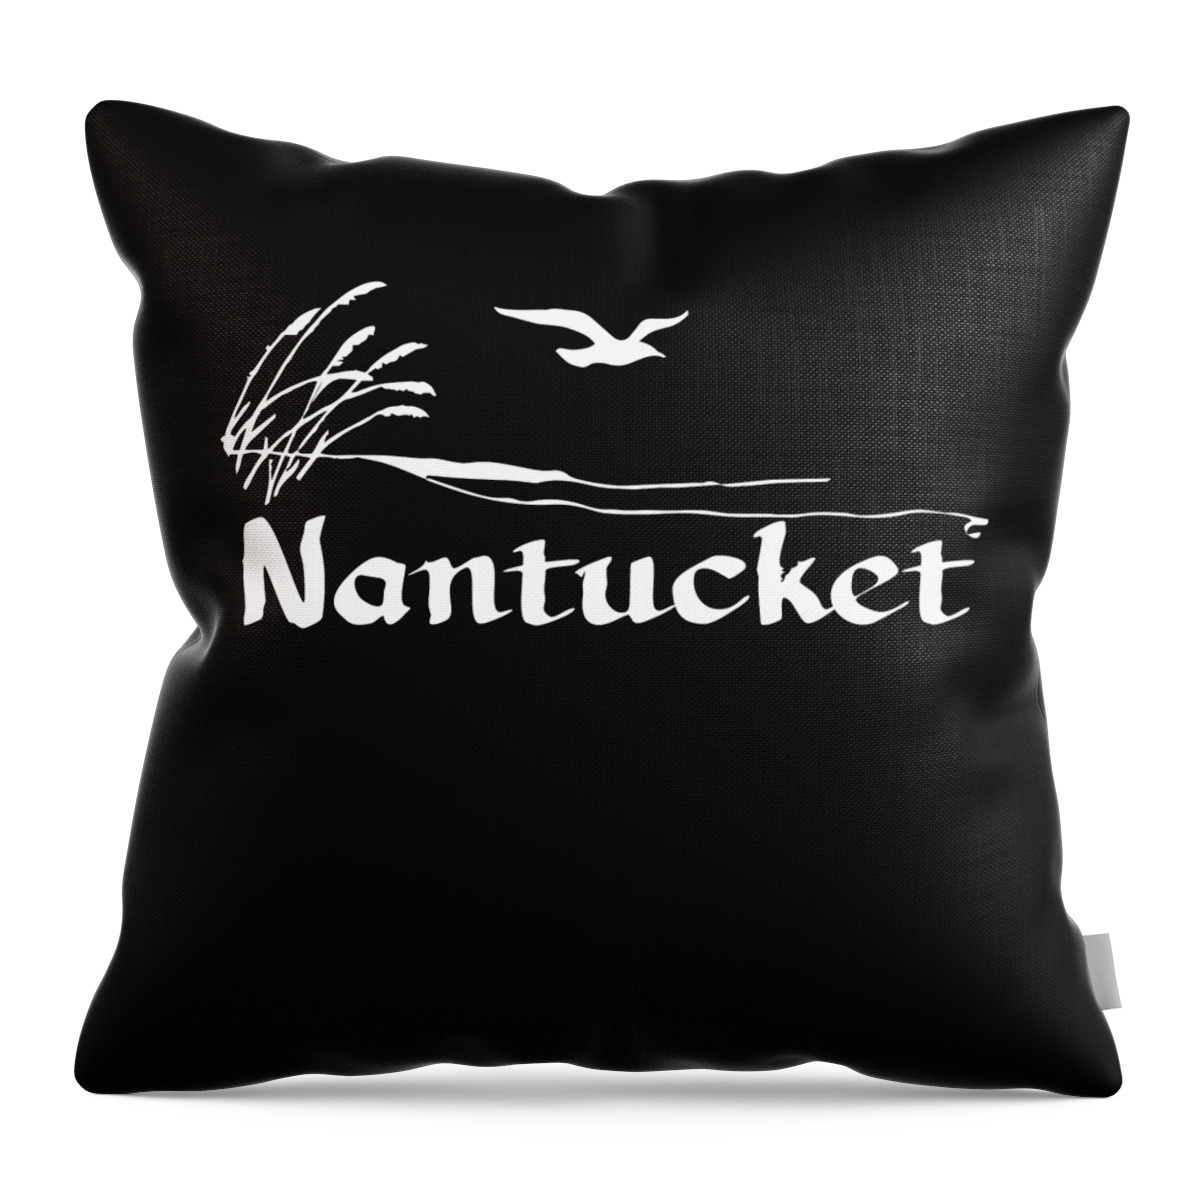 Funny Throw Pillow featuring the digital art Nantucket by Flippin Sweet Gear